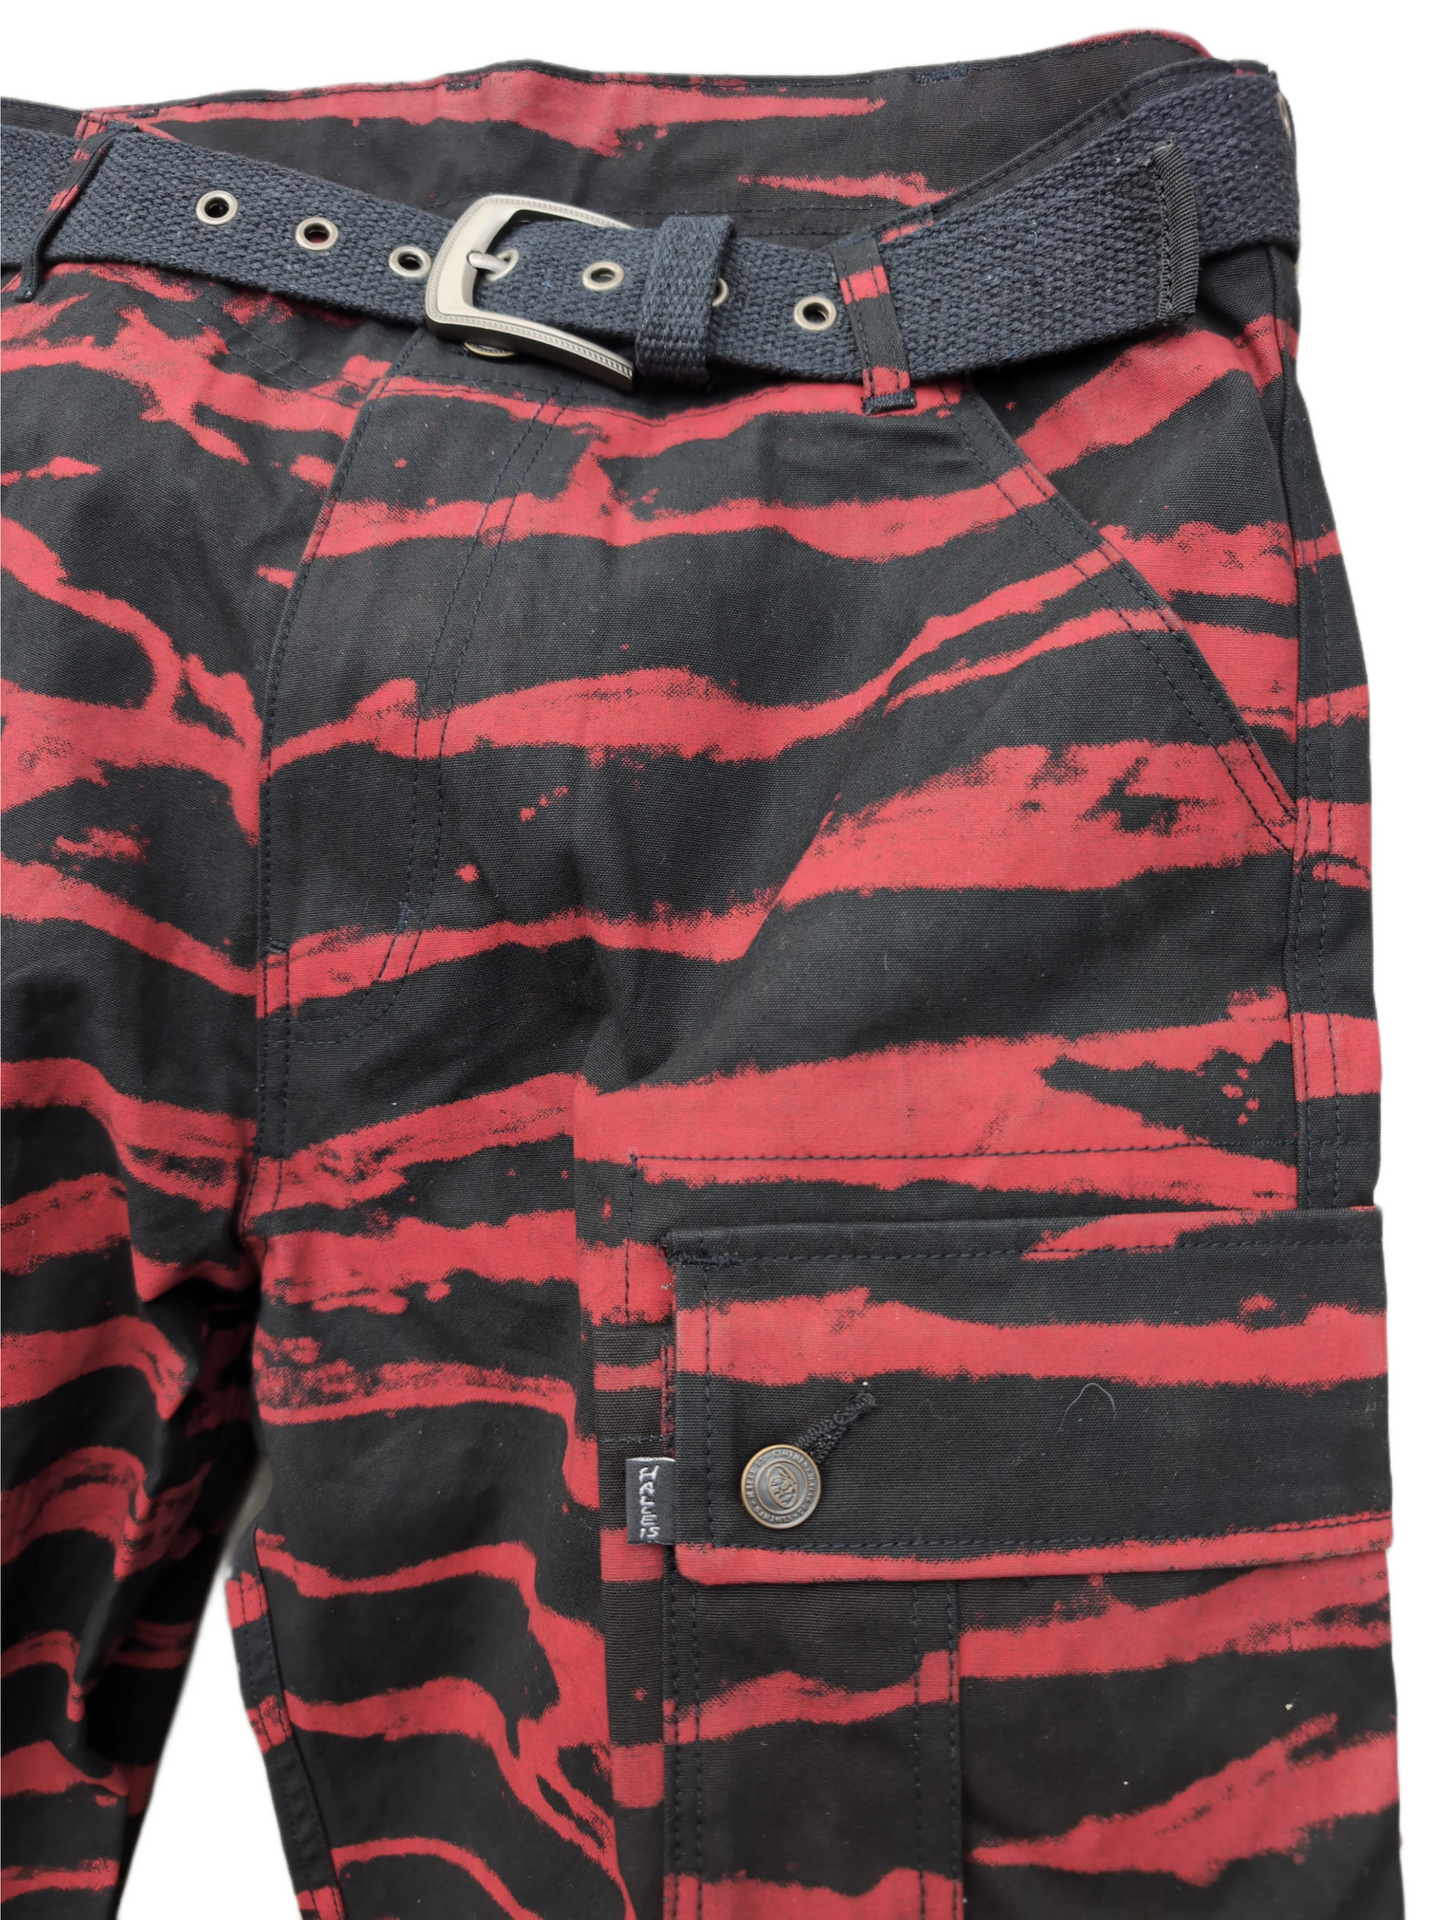 Halle 15 Ultra Cargo Shorts Black Red Stripes Vintage Shorts S Bis 5XL